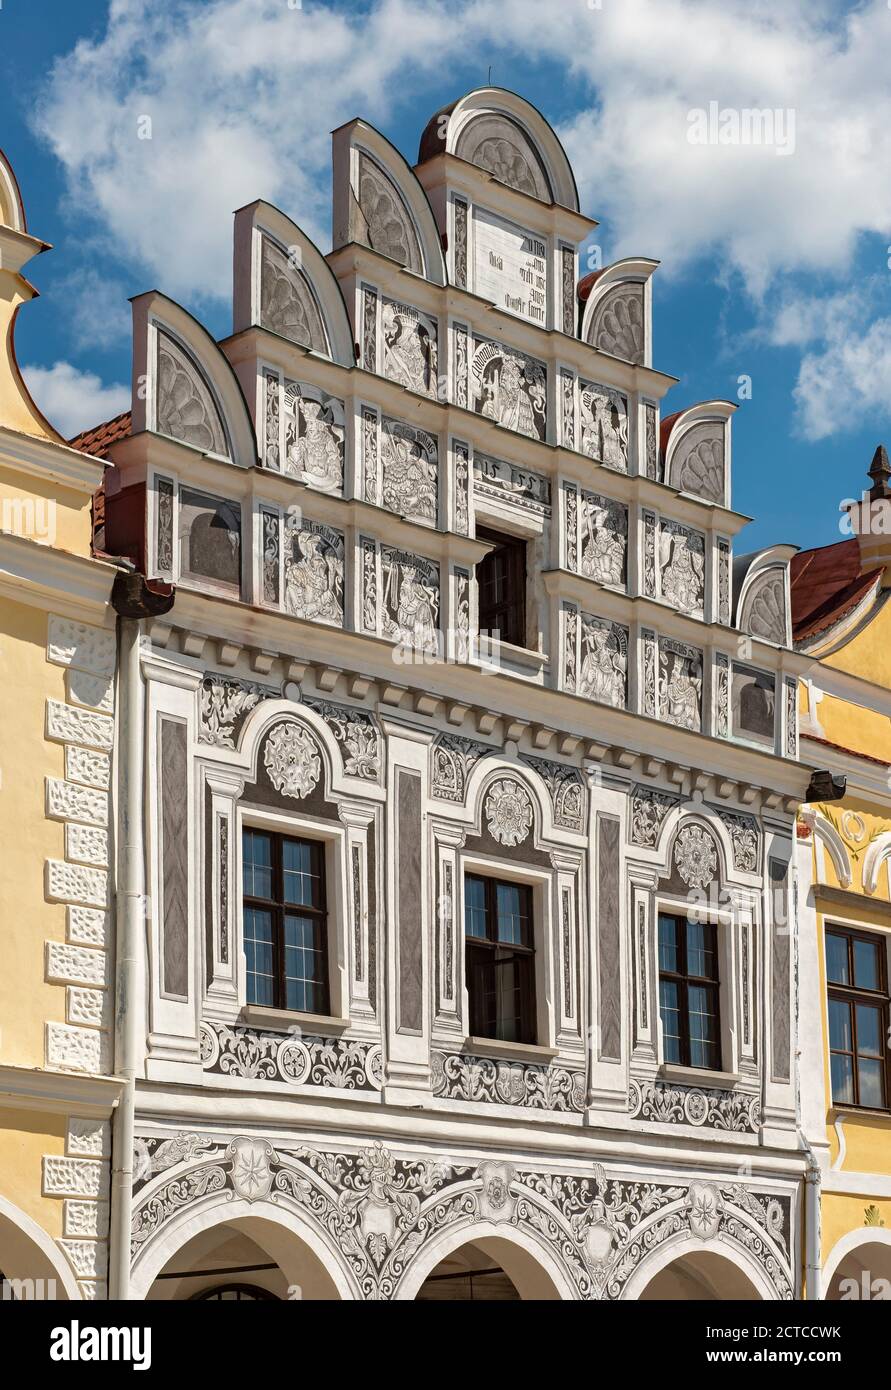 House Nr. 61 with sgraffiti facade, Telč Town Square, Czech Republic Stock Photo